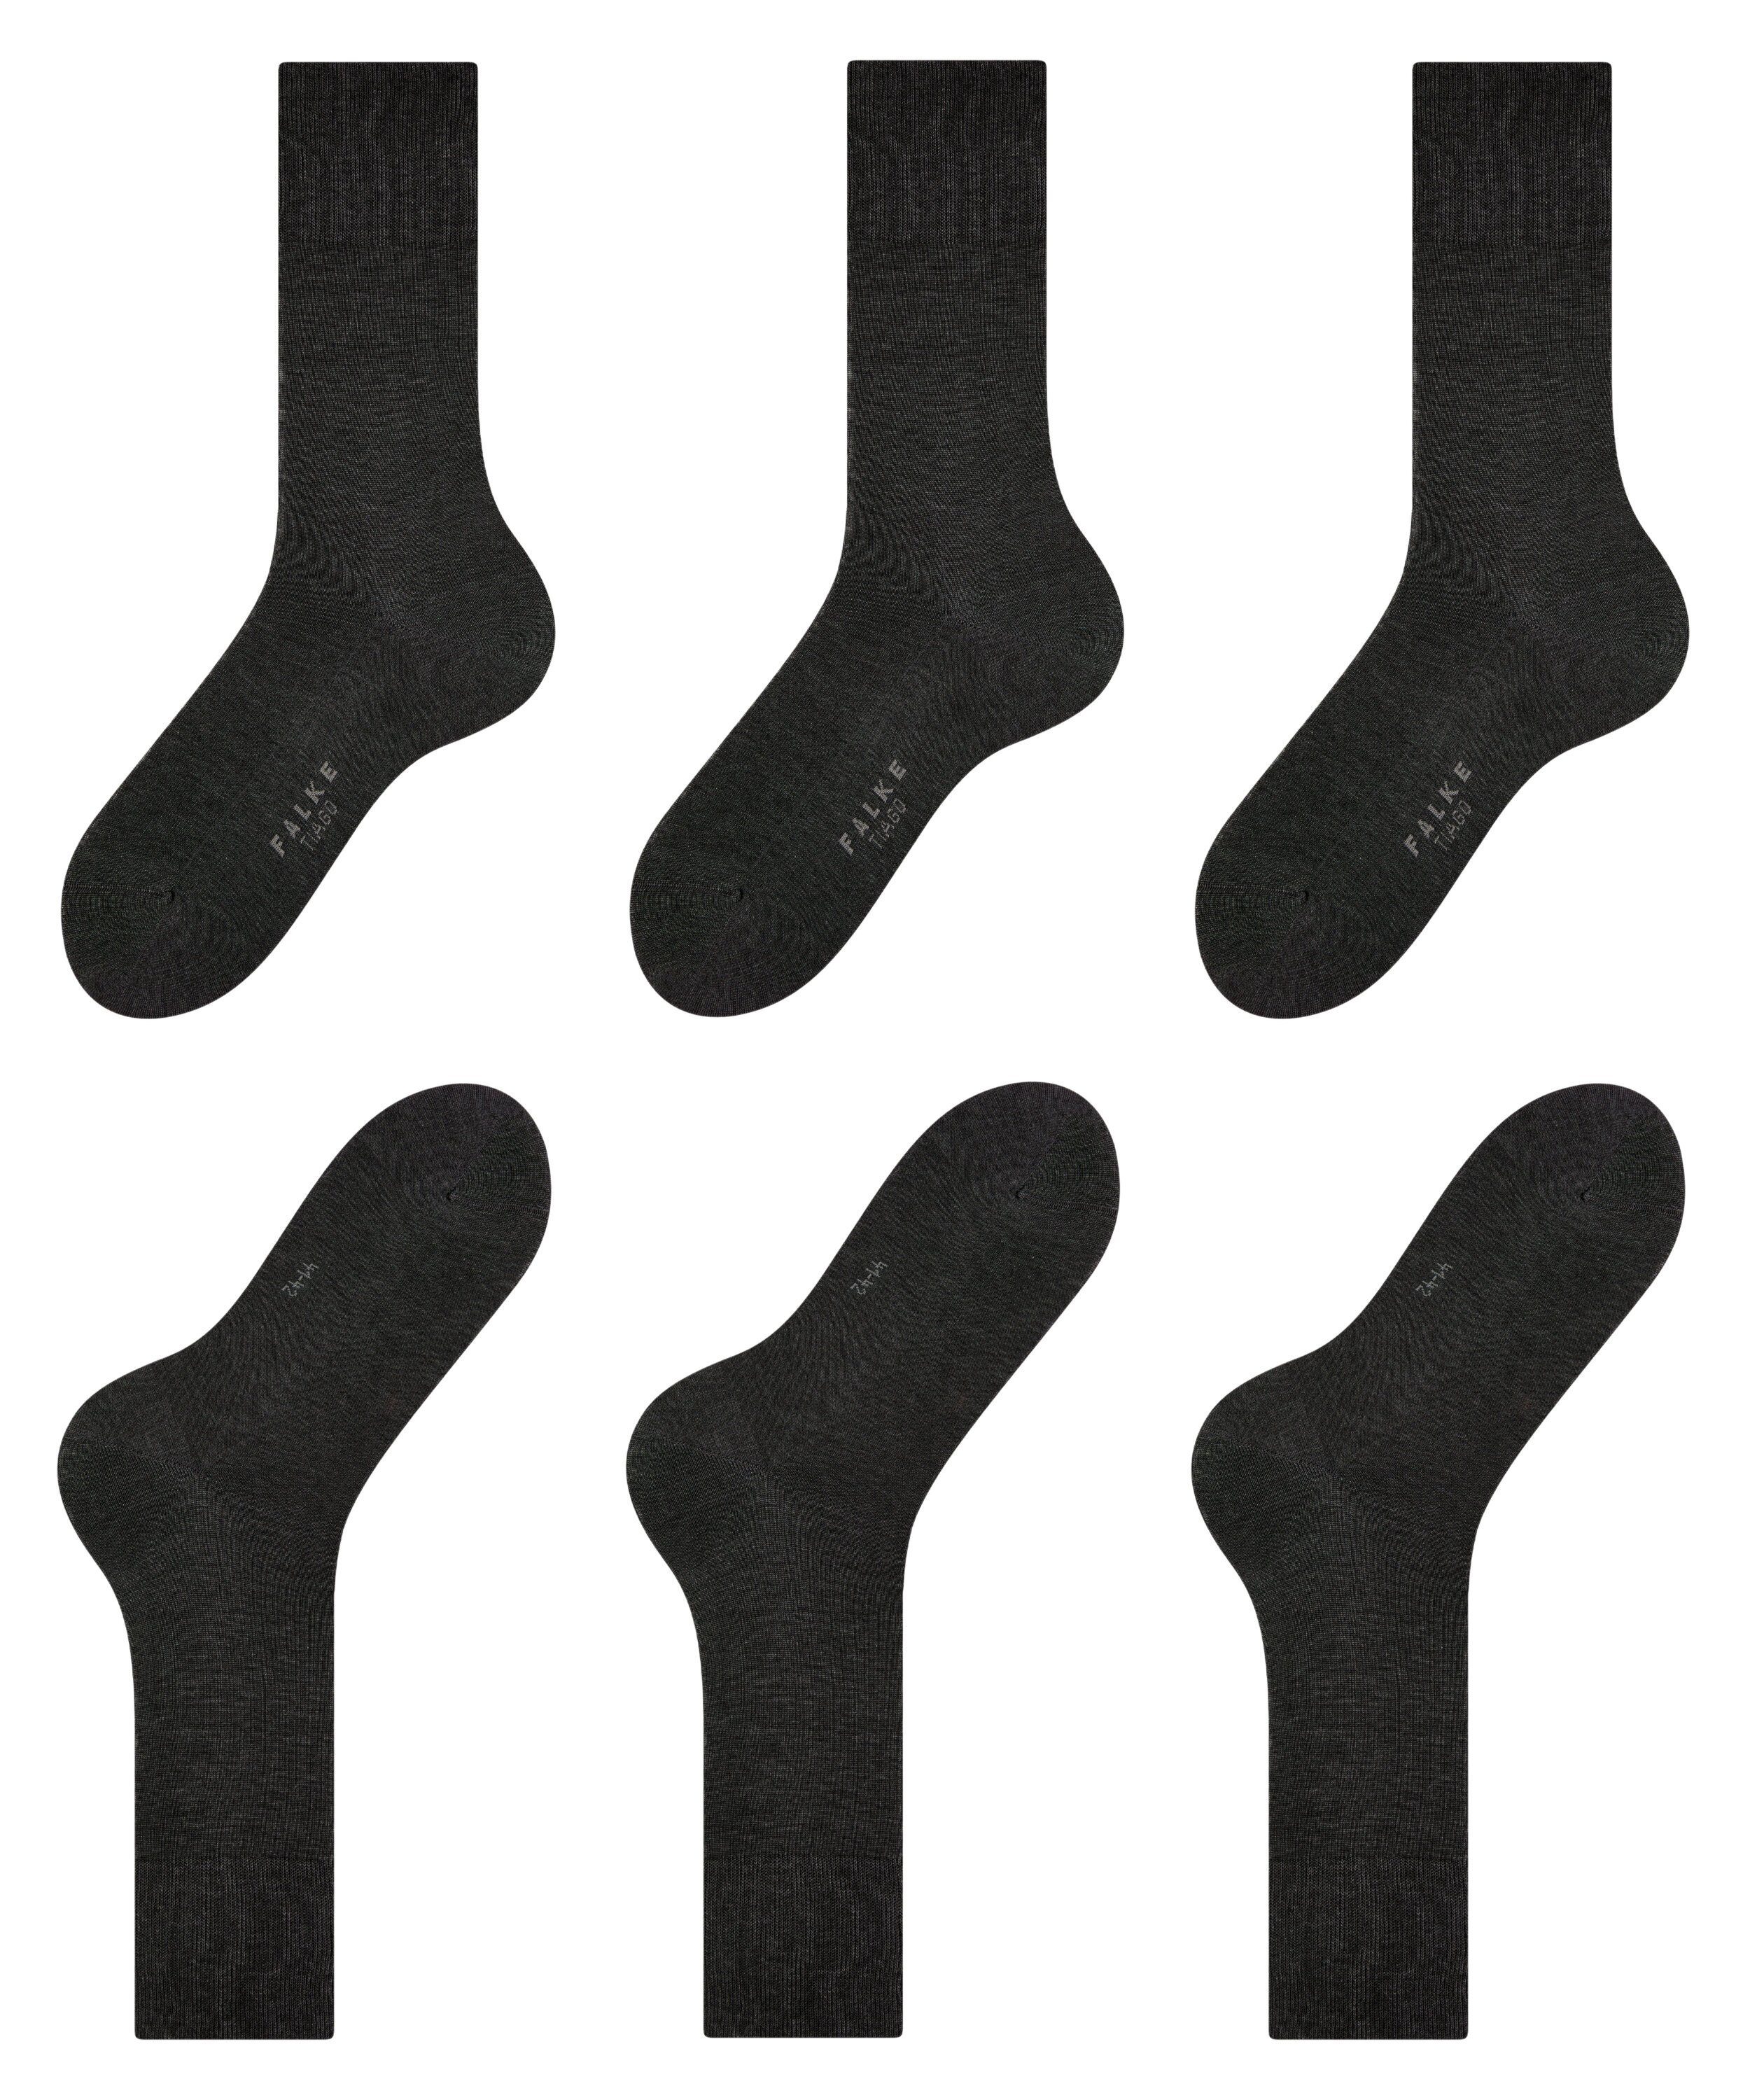 (3095) Tiago (3-Paar) Socken FALKE anthracite 3-Pack mel.